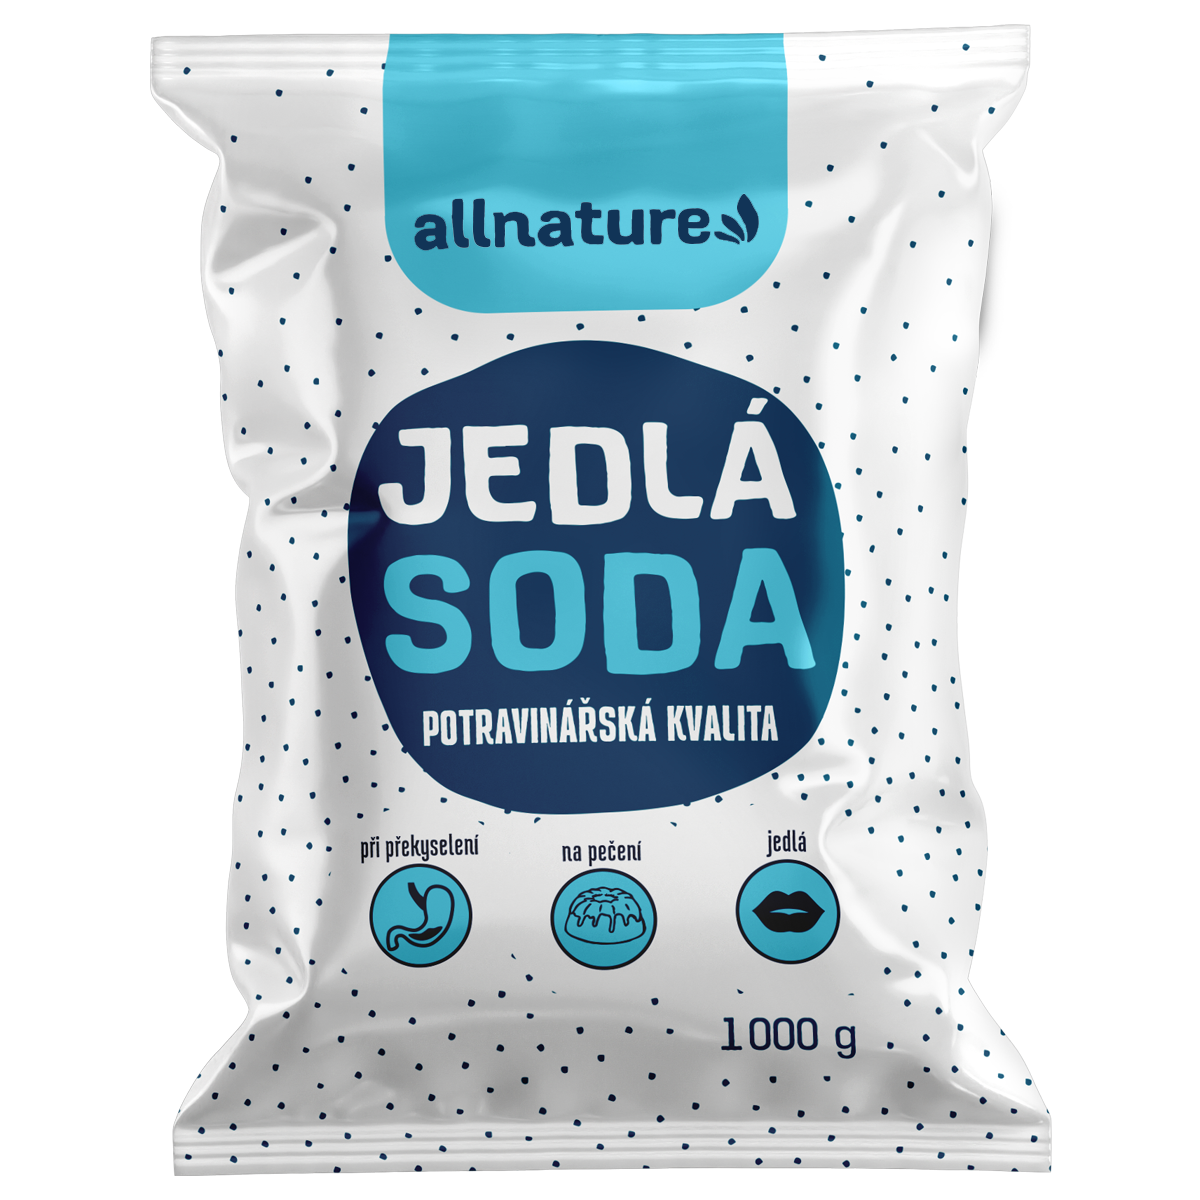 Allnature Jedlá soda (1 000 g) - II. jakost - potravinářská kvalita Allnature